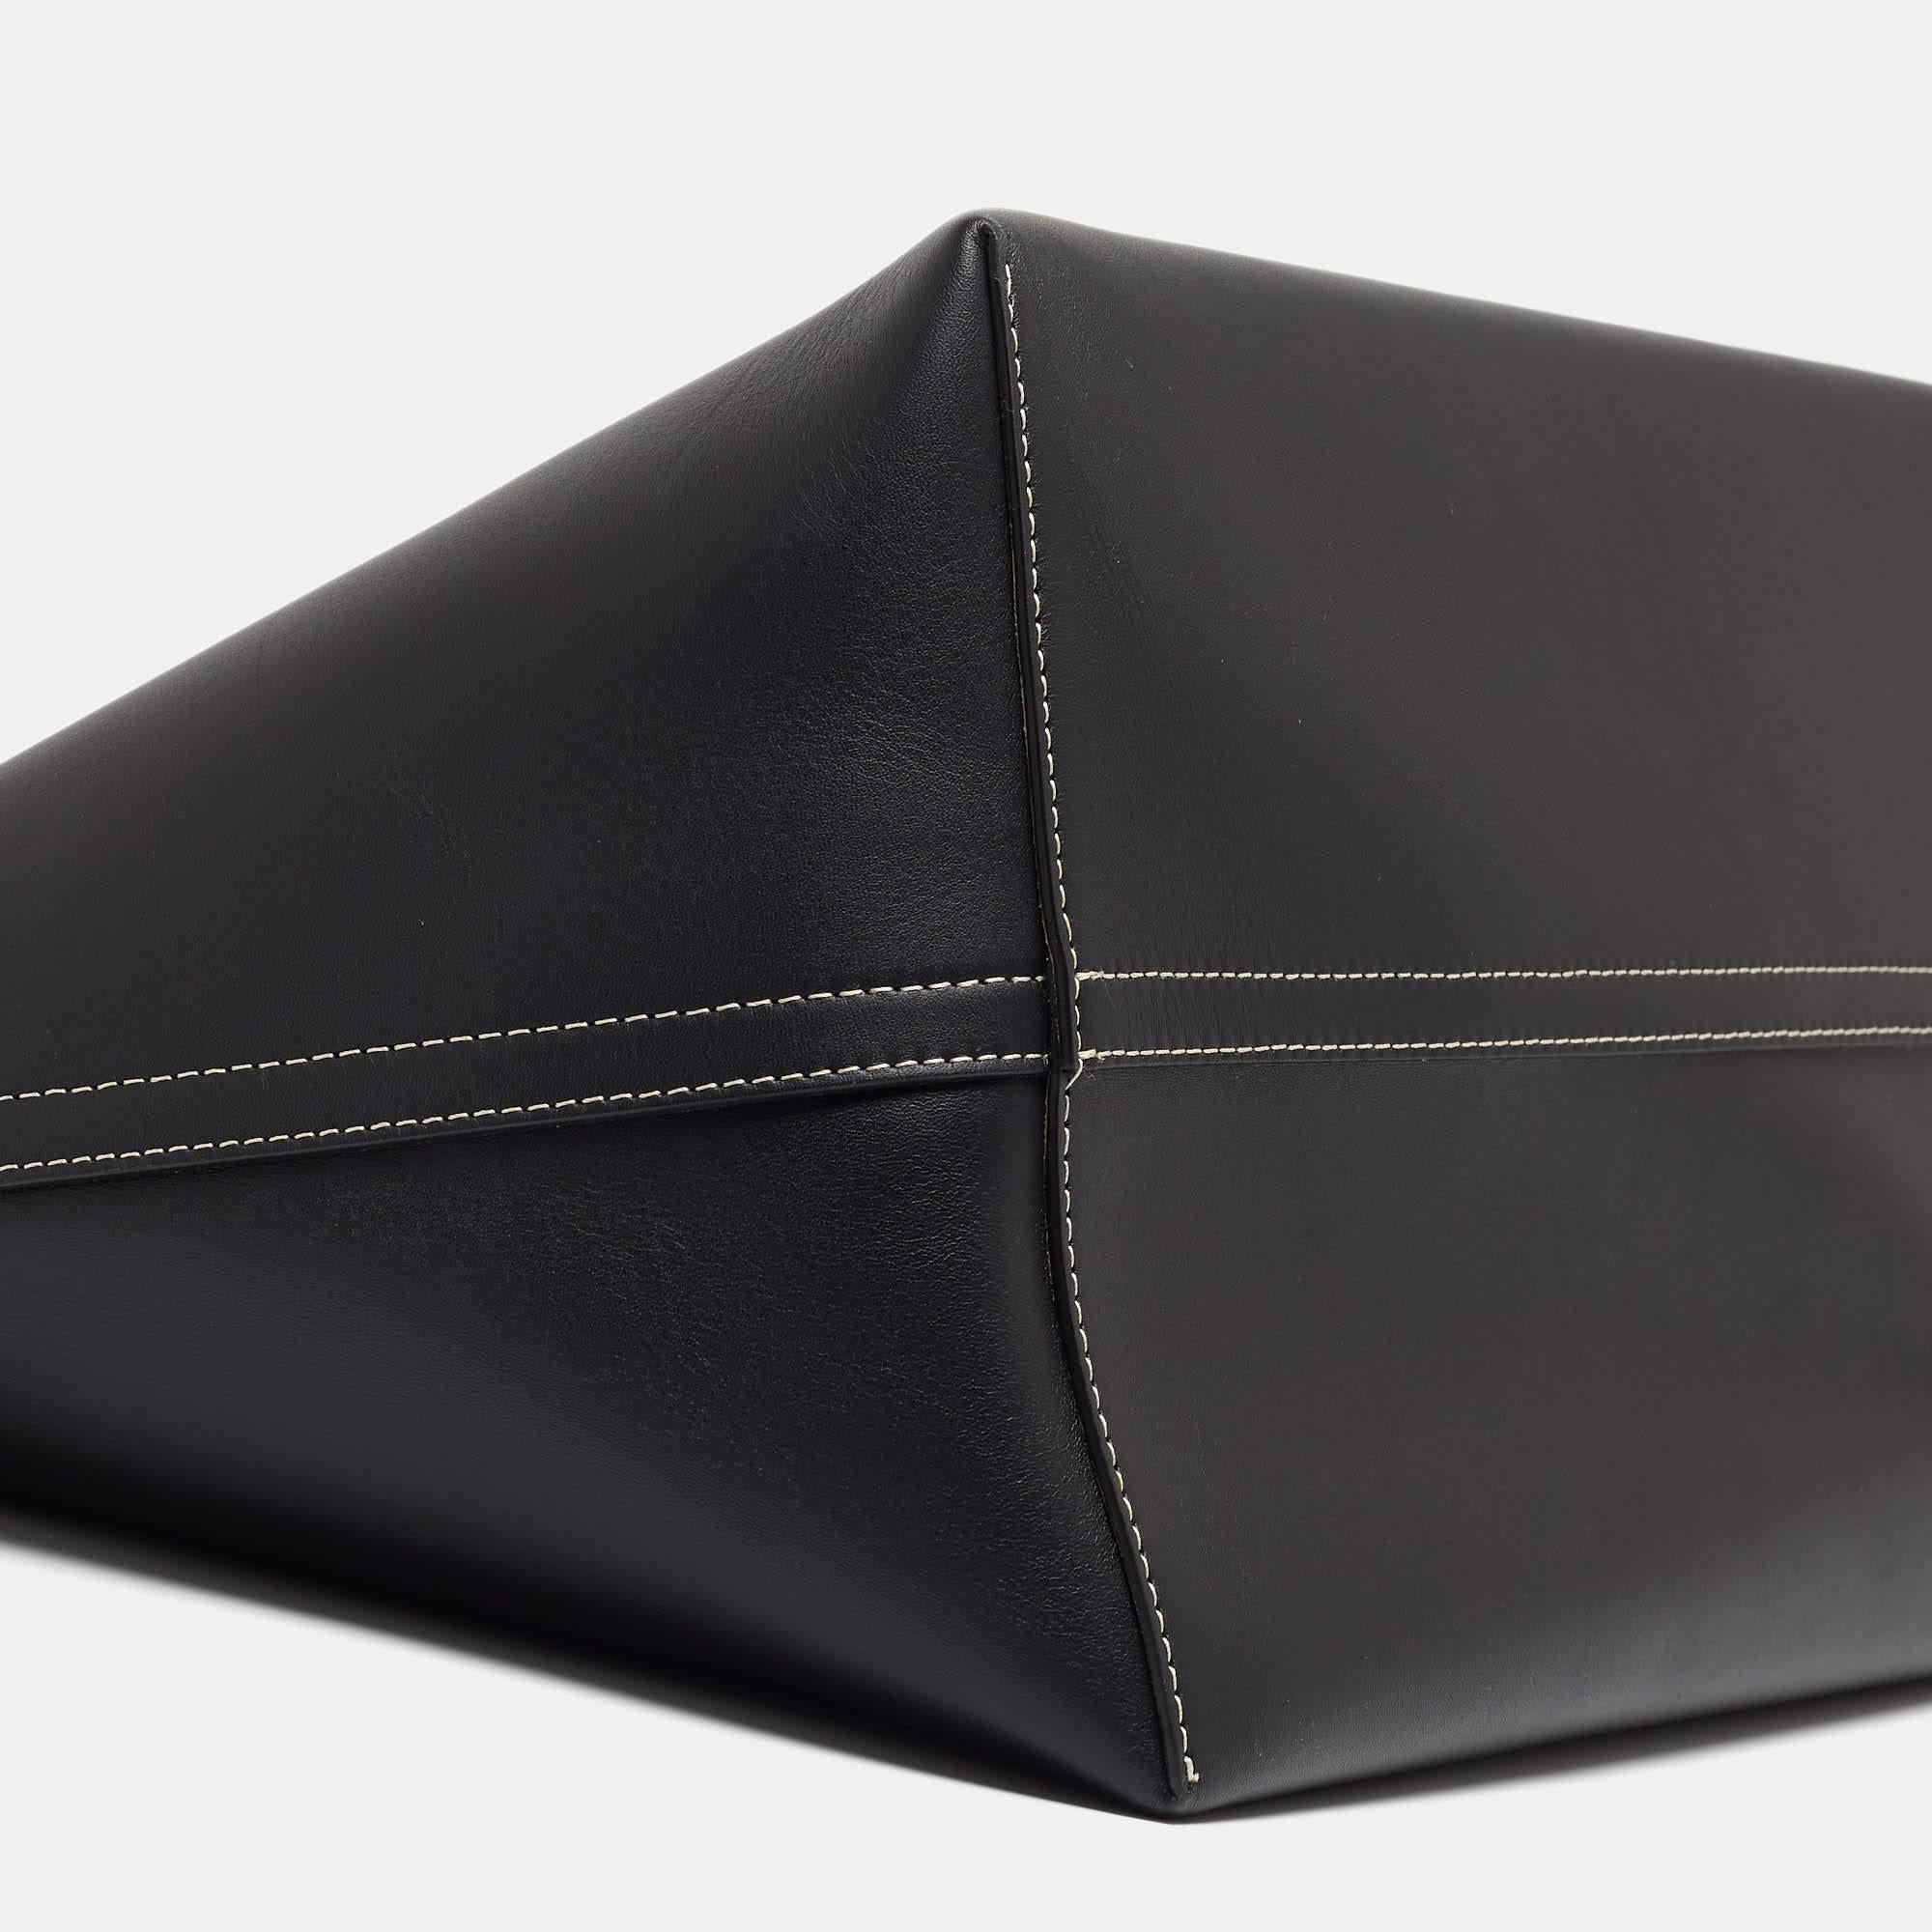 Burberry Black Leather Medium Soft Pocket Tote For Sale 6